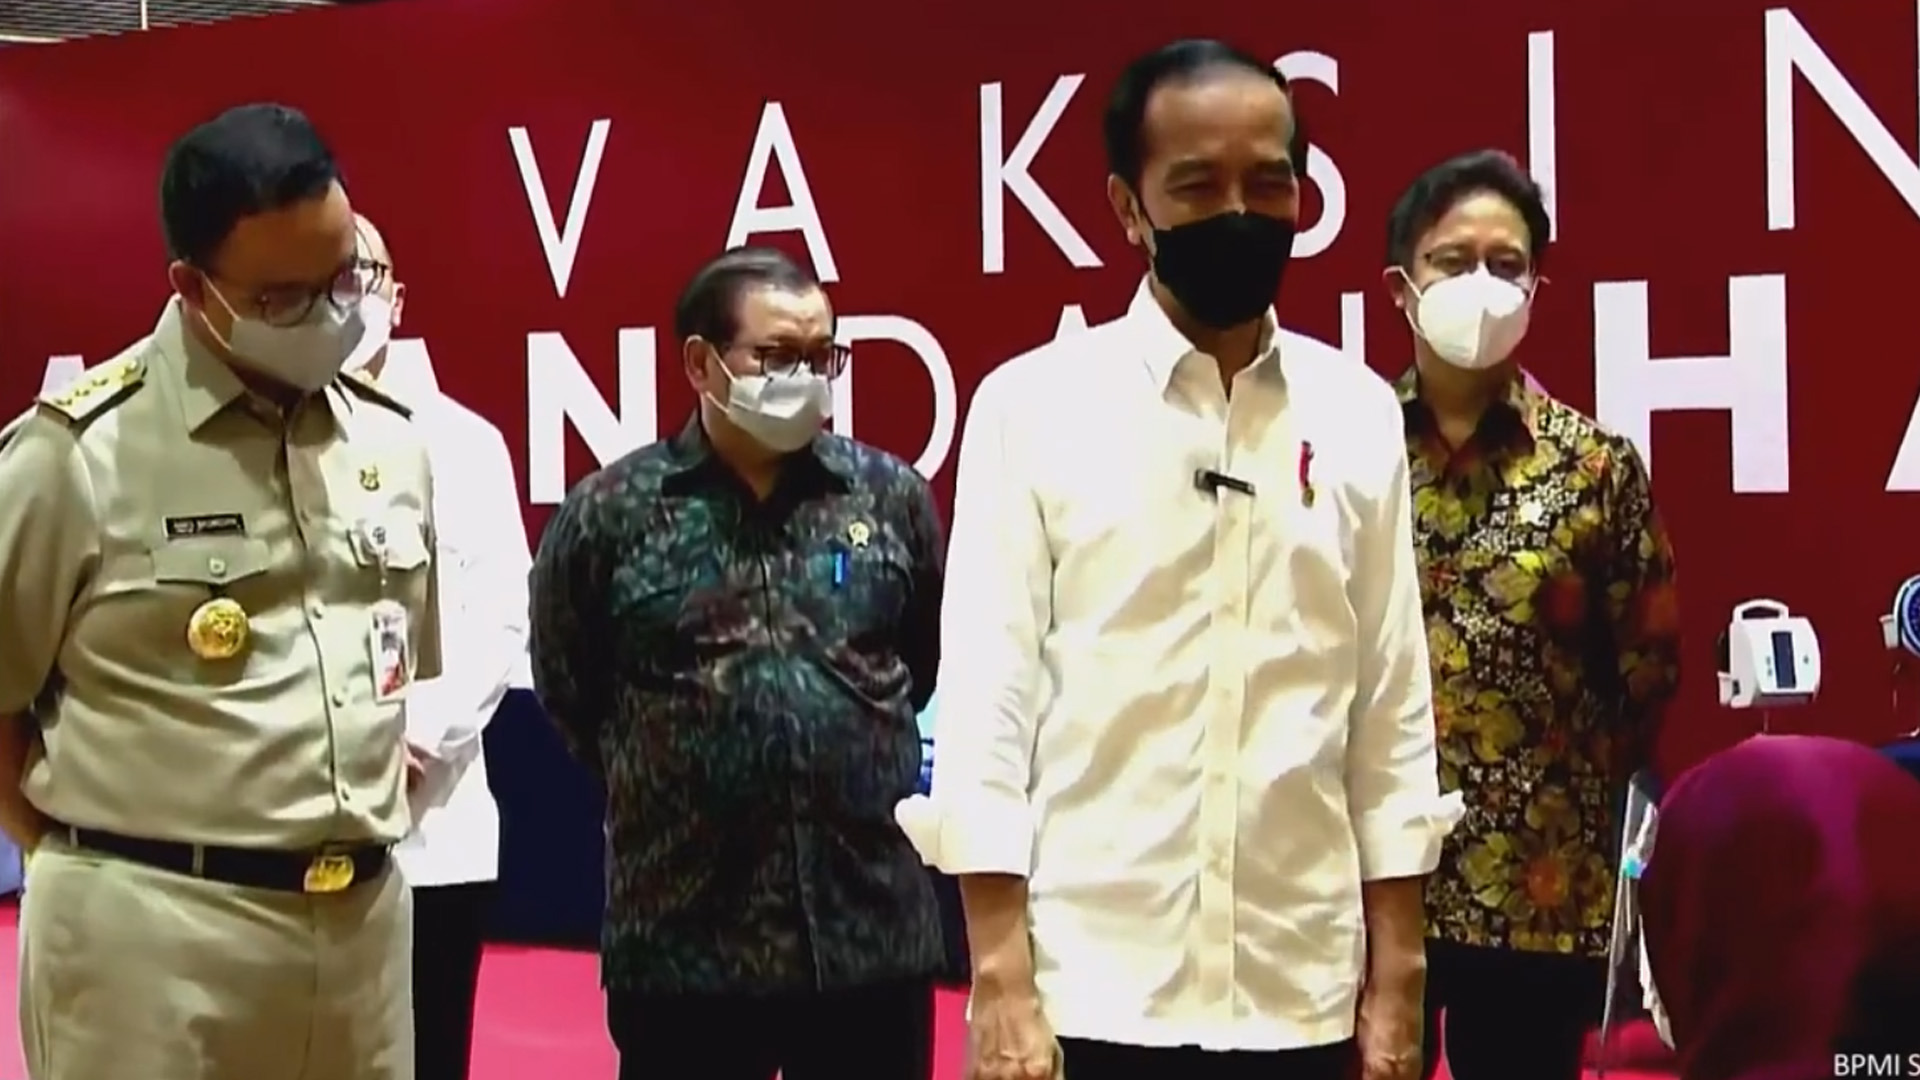 Tinjau Vaksinasi Terhadap Pelaku Usaha, Jokowi: Kita Harapkan Bisa Mengurangi Penyebaran Covid-19